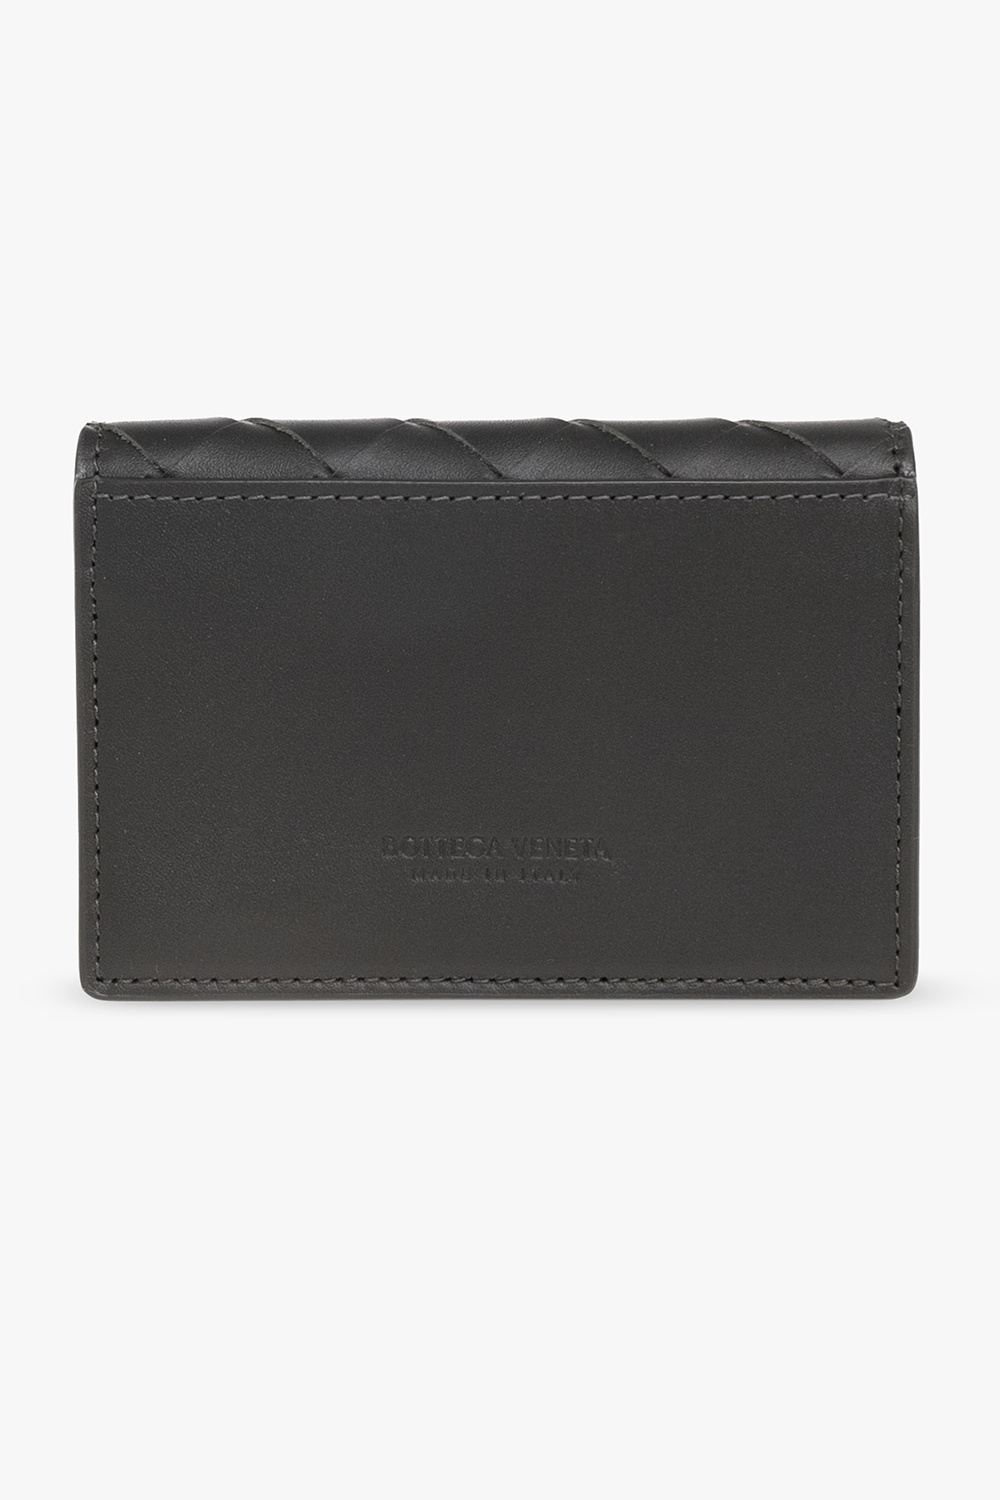 Bottega Veneta Bottega Veneta zip-around Intrecciato wallet